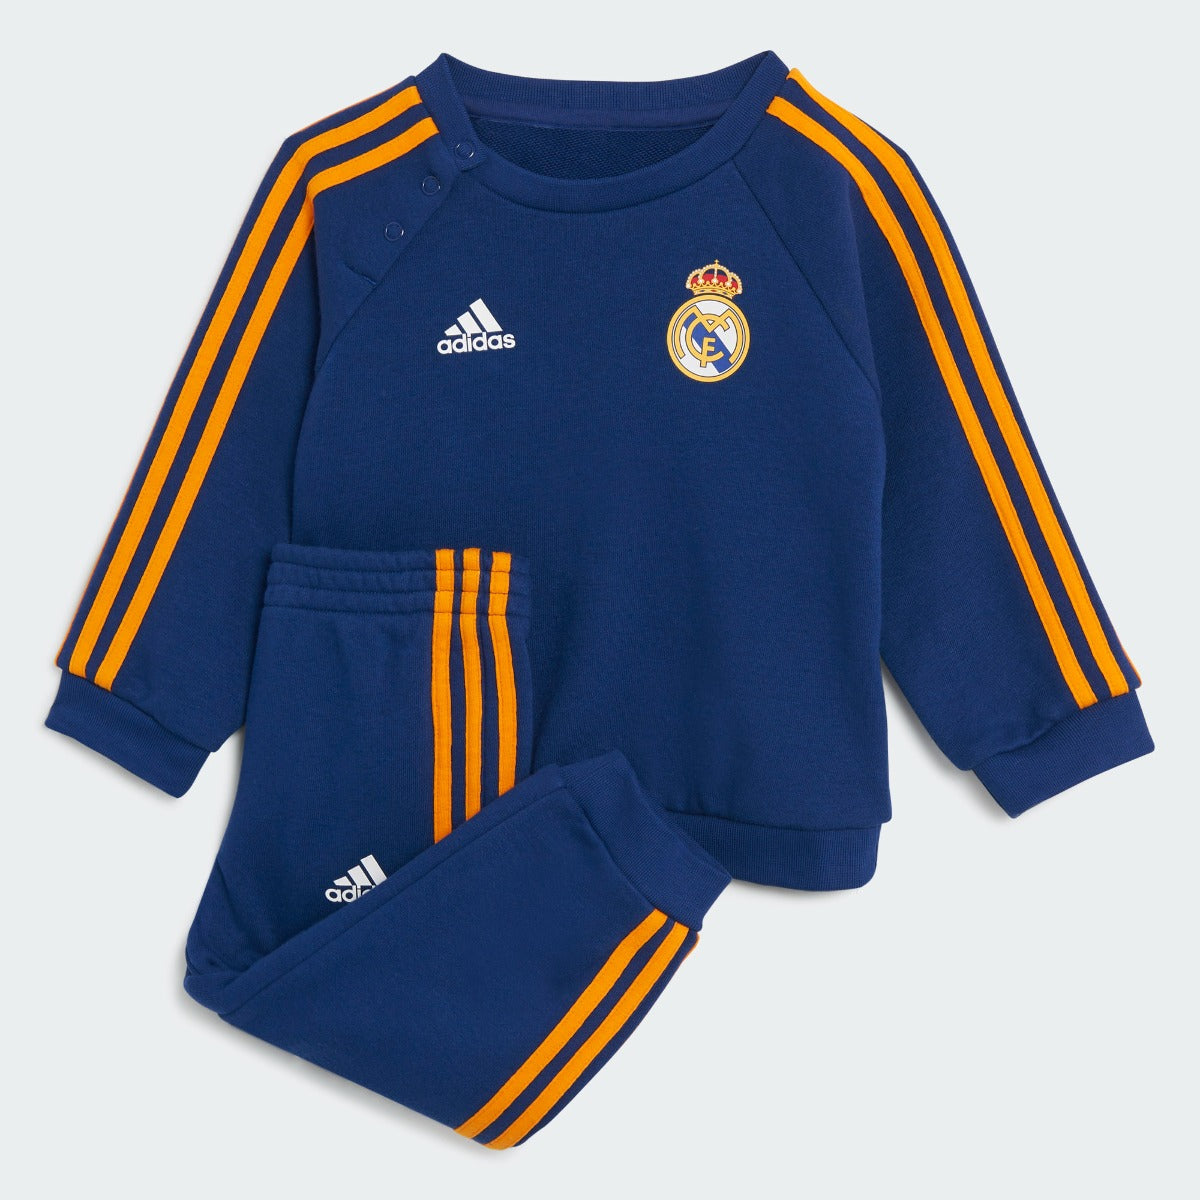 Adidas 2021-22 Real Madrid 3 Stripes Baby Jogger - Victory Blue (Set)